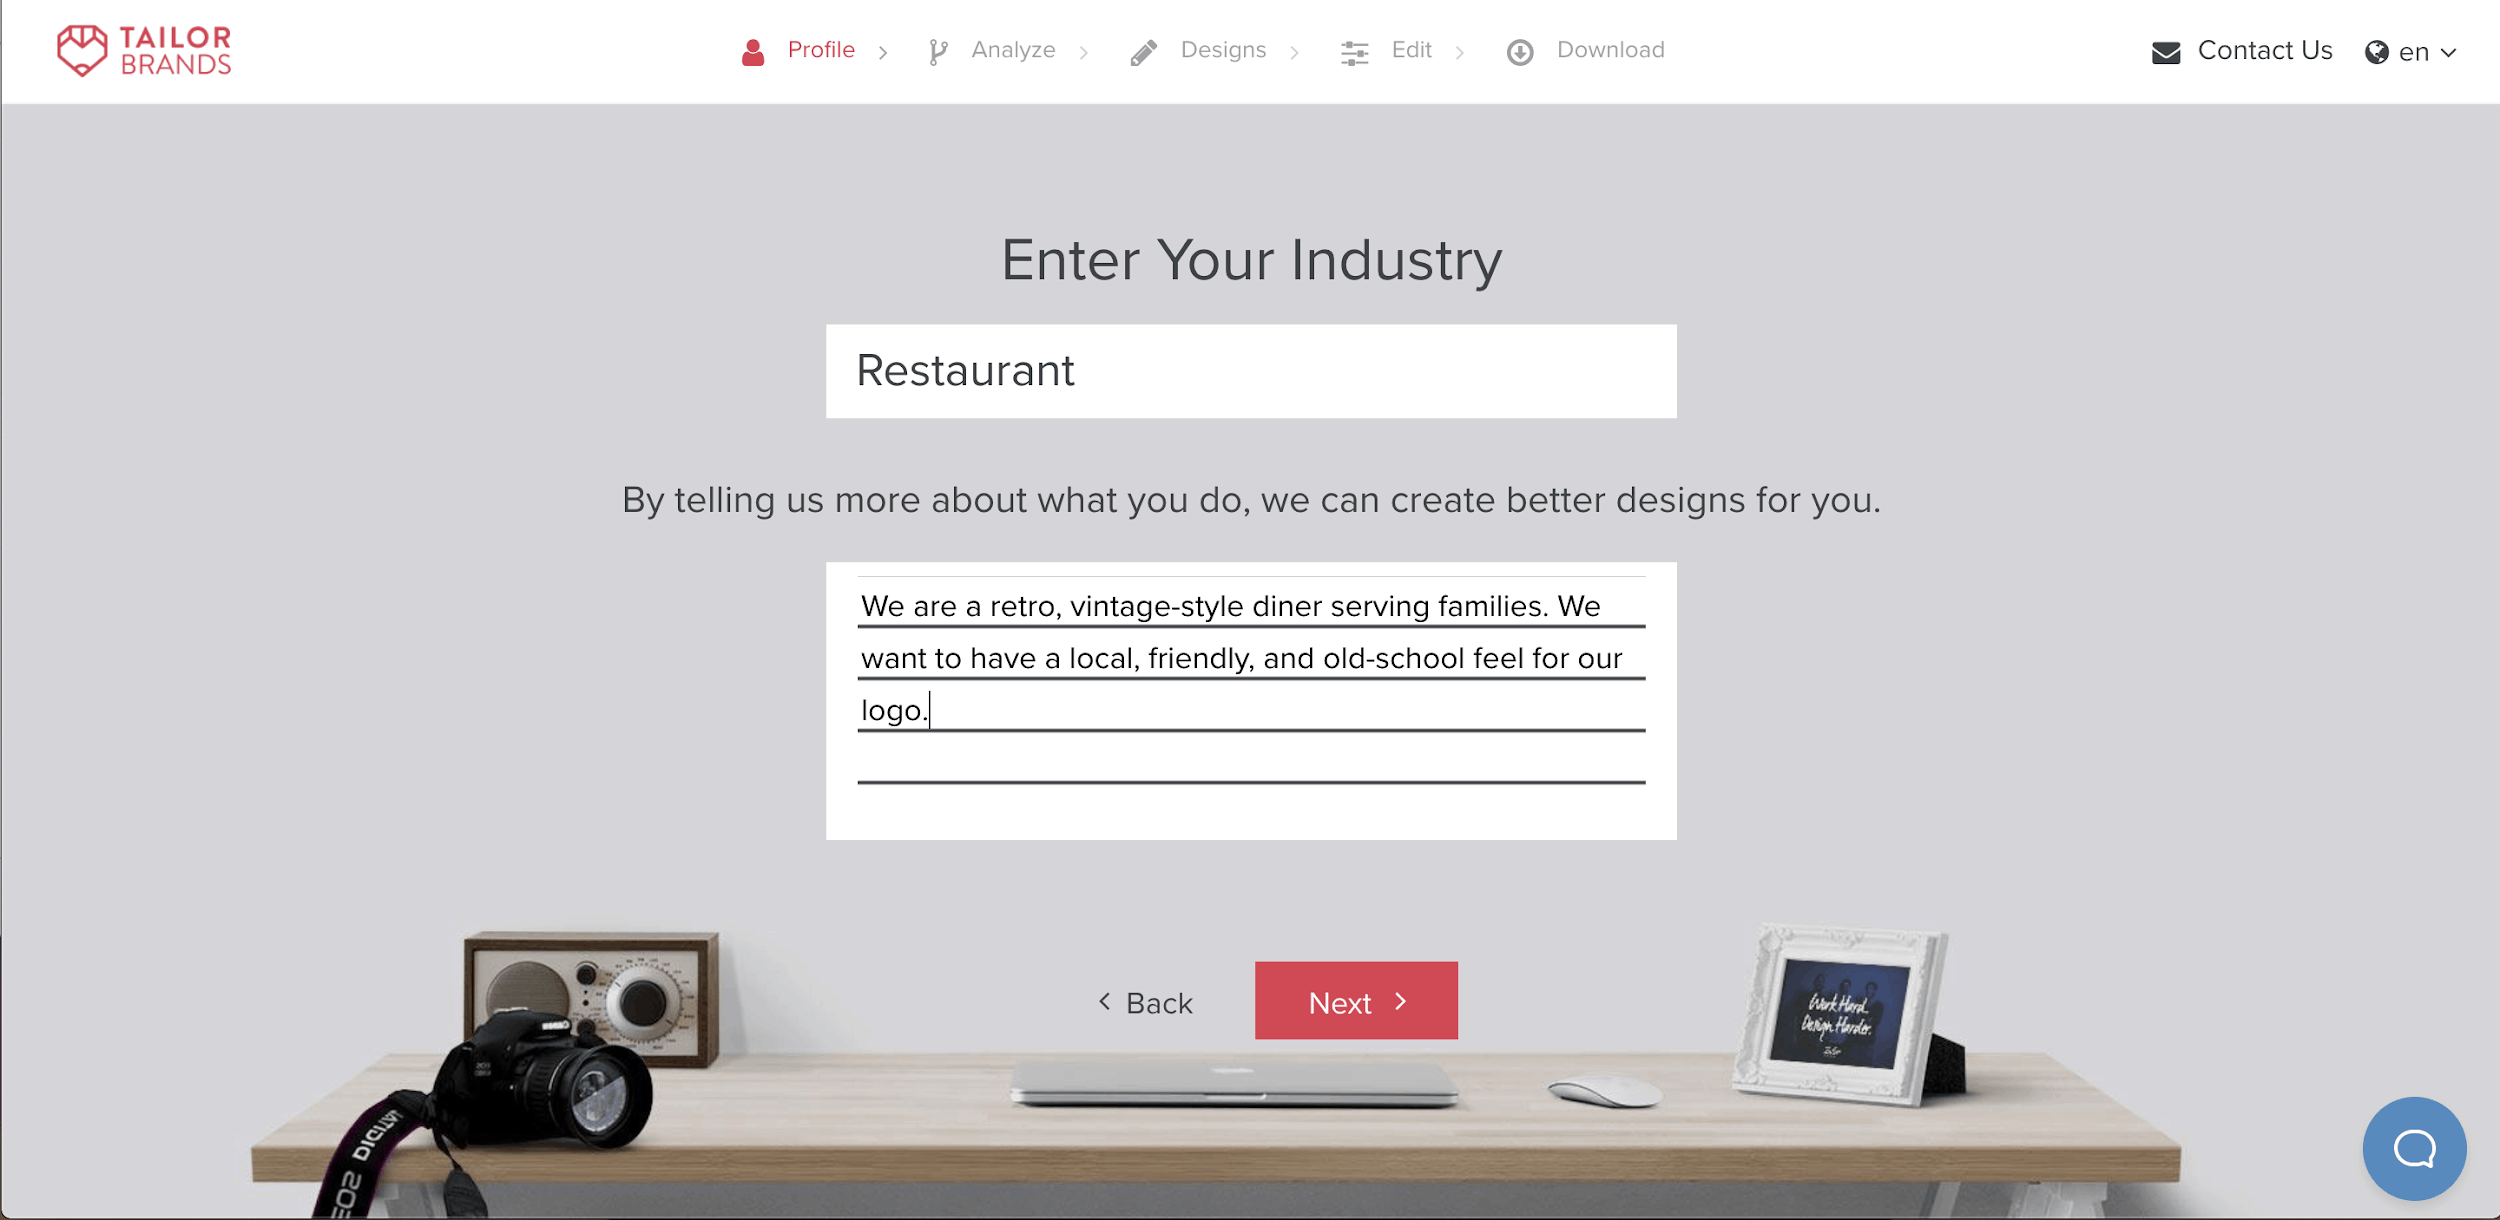 Tailor Brands screenshot - Enter your industry